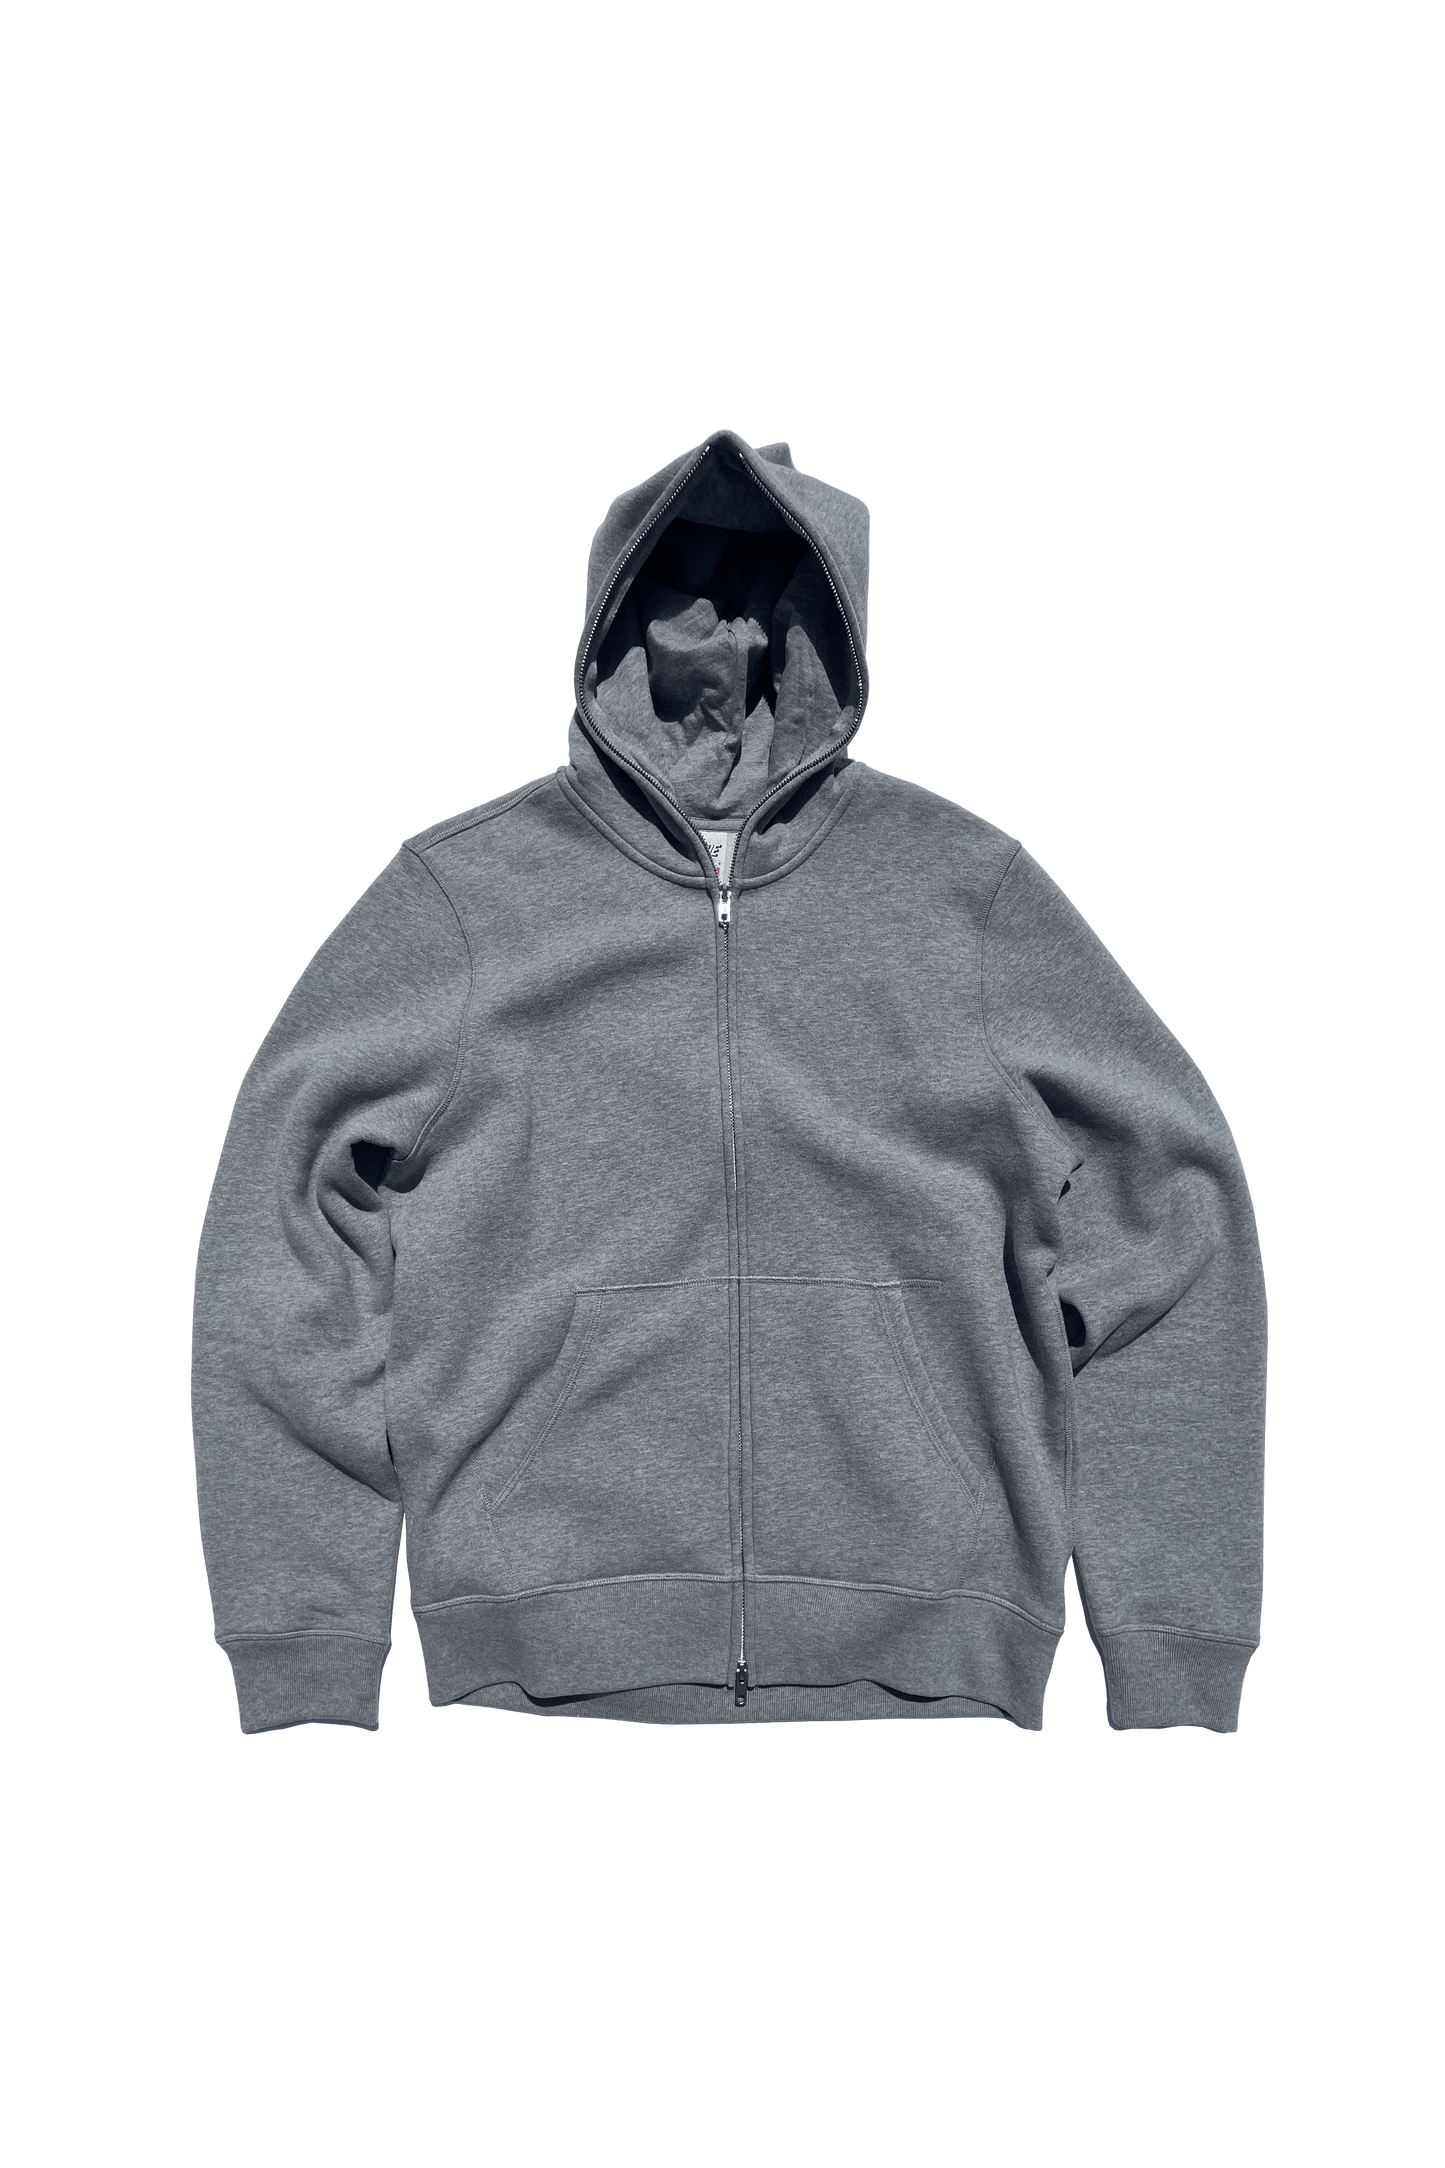 Full Zip Hoodies Wholesale  Blank Full Zip Sweatshirts Canada